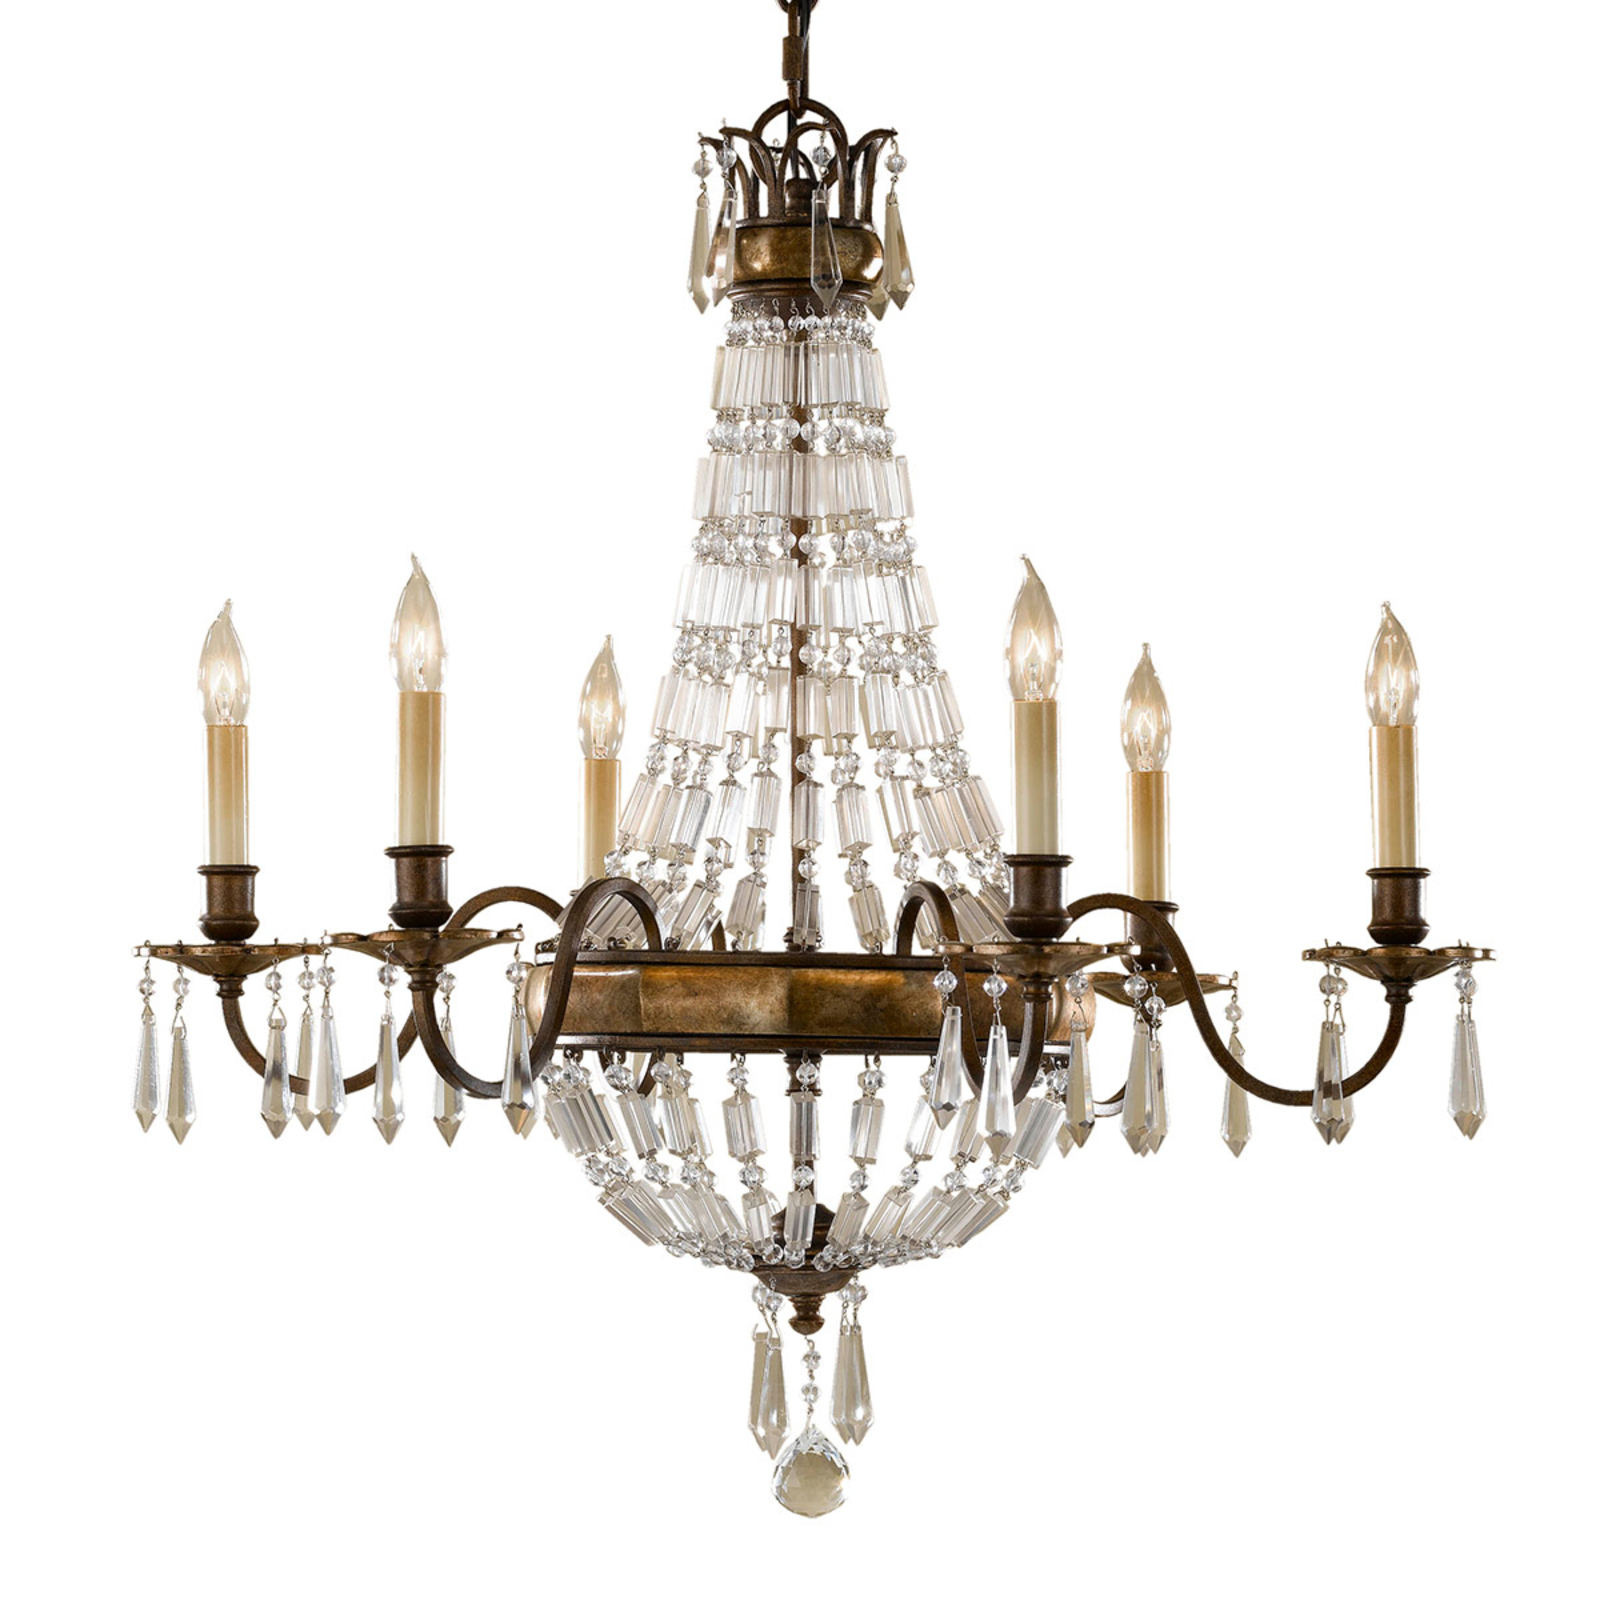 Bellini - lampadario di stile antico